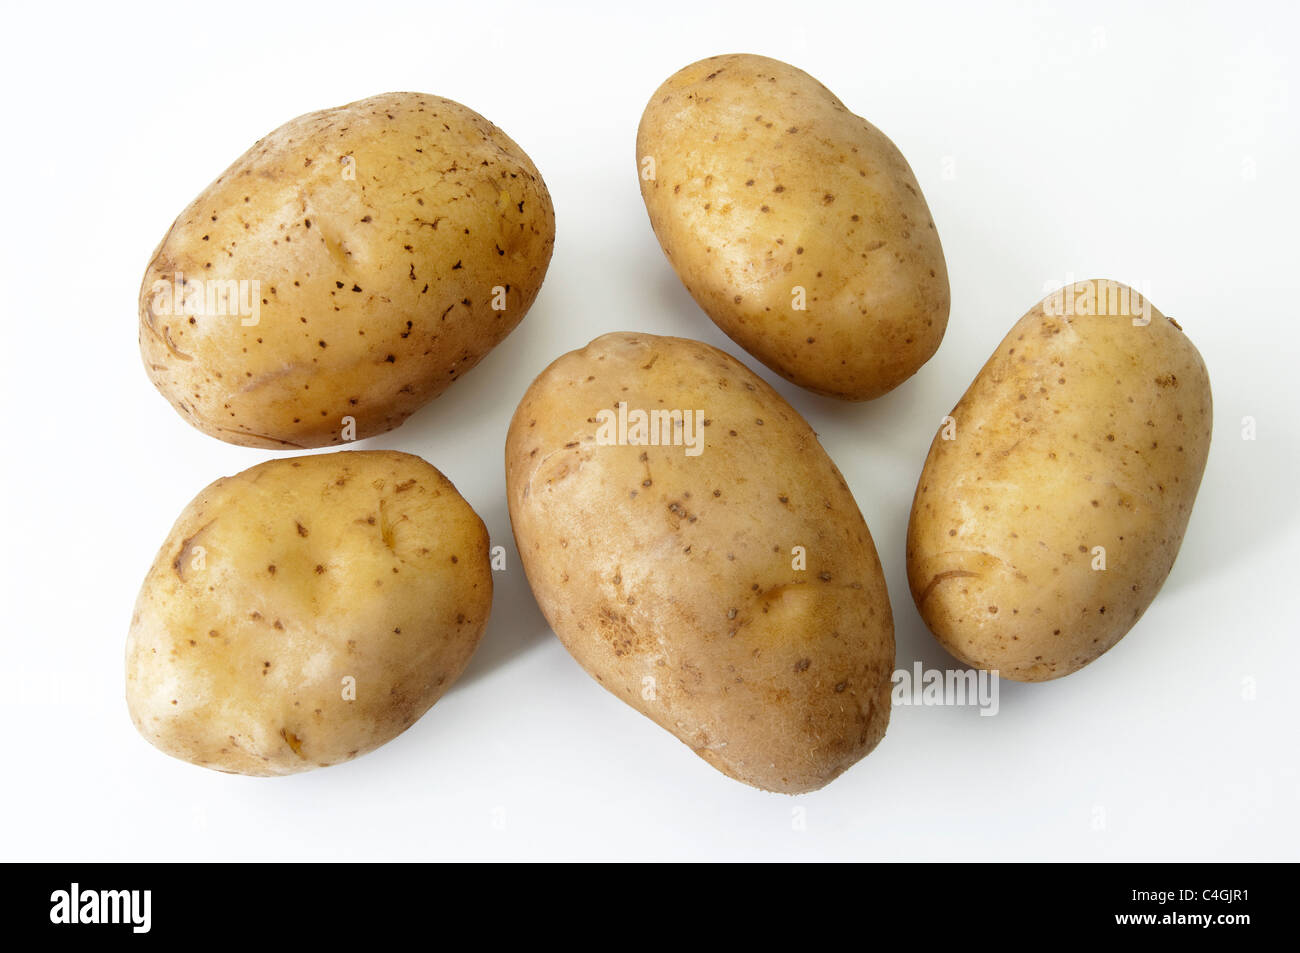 Potato (Solanum tuberosum Linda). Tubers, studio picture against a white background. Stock Photo